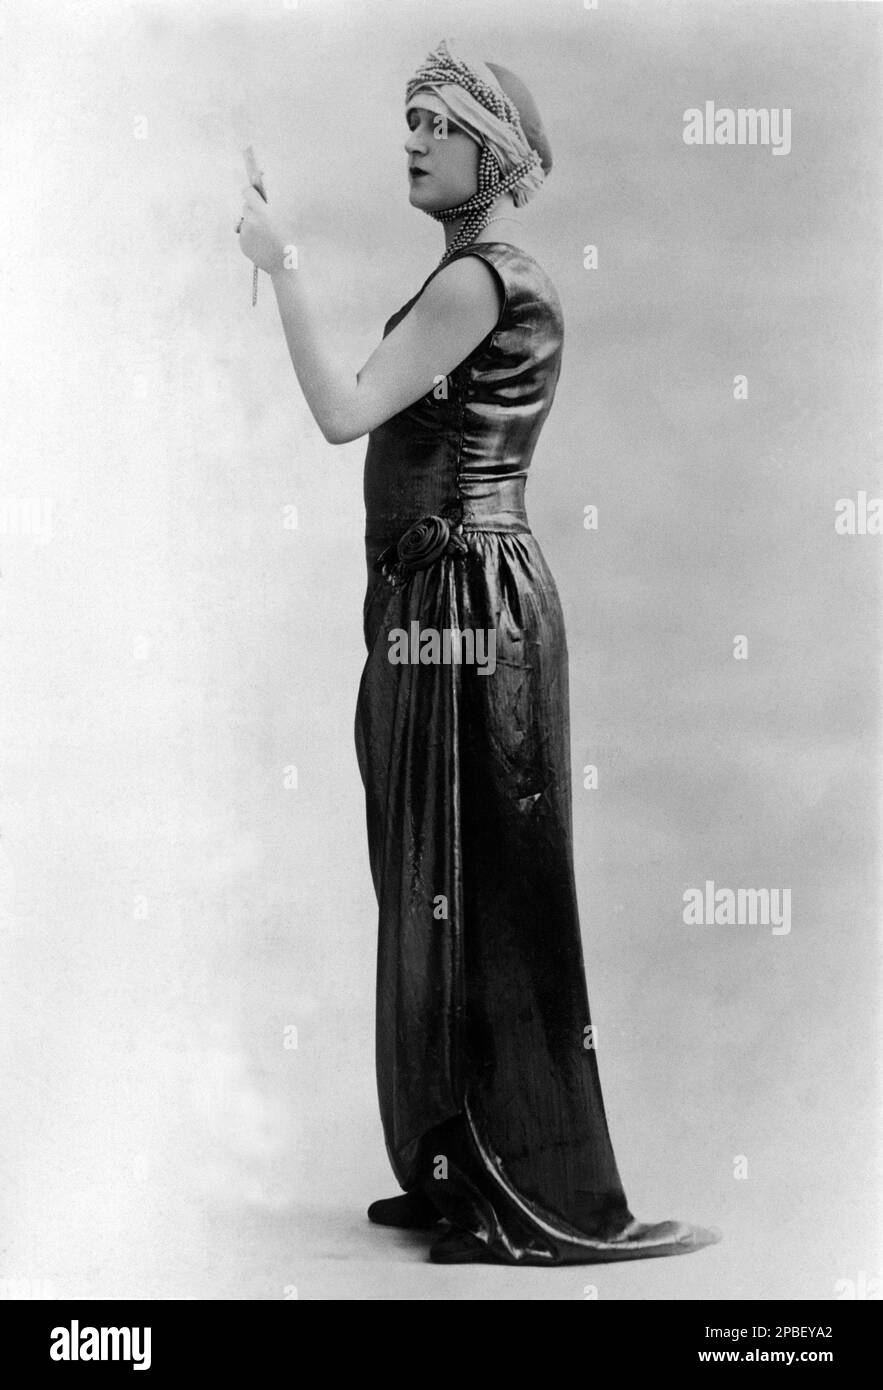 USA , 1920 's : Unknown british vaudeville actor female impersonator . -  Omosessualità - LGBT - Omosessuale - GAY - Homosexuality - Homosexual - Travestito - transvestite - DRAG QUEEN  - TRANSGENDER - CABARET - THEATER - THEATRE - TEATRO - MIRROR - SPECCHIO  - turbante - turban - profilo - profile --- Archivio GBB Stock Photo